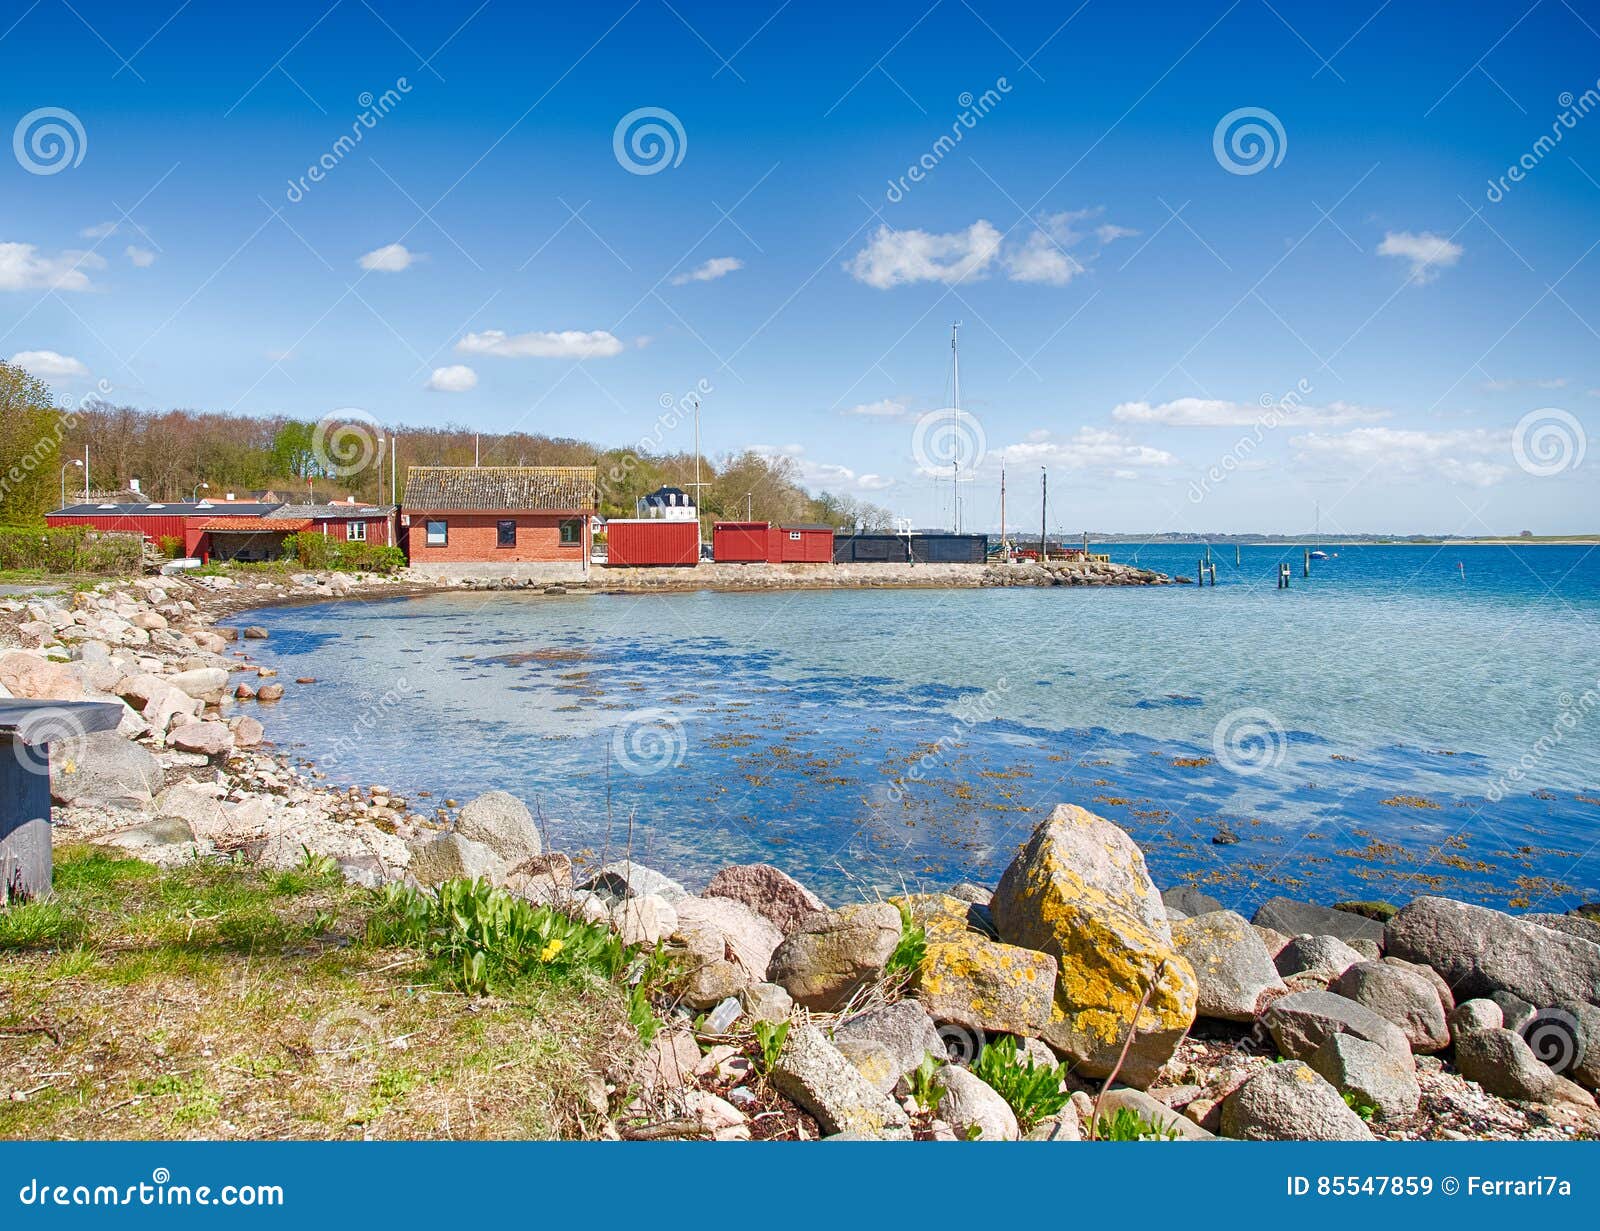 dyreborg coastline on the island of funen